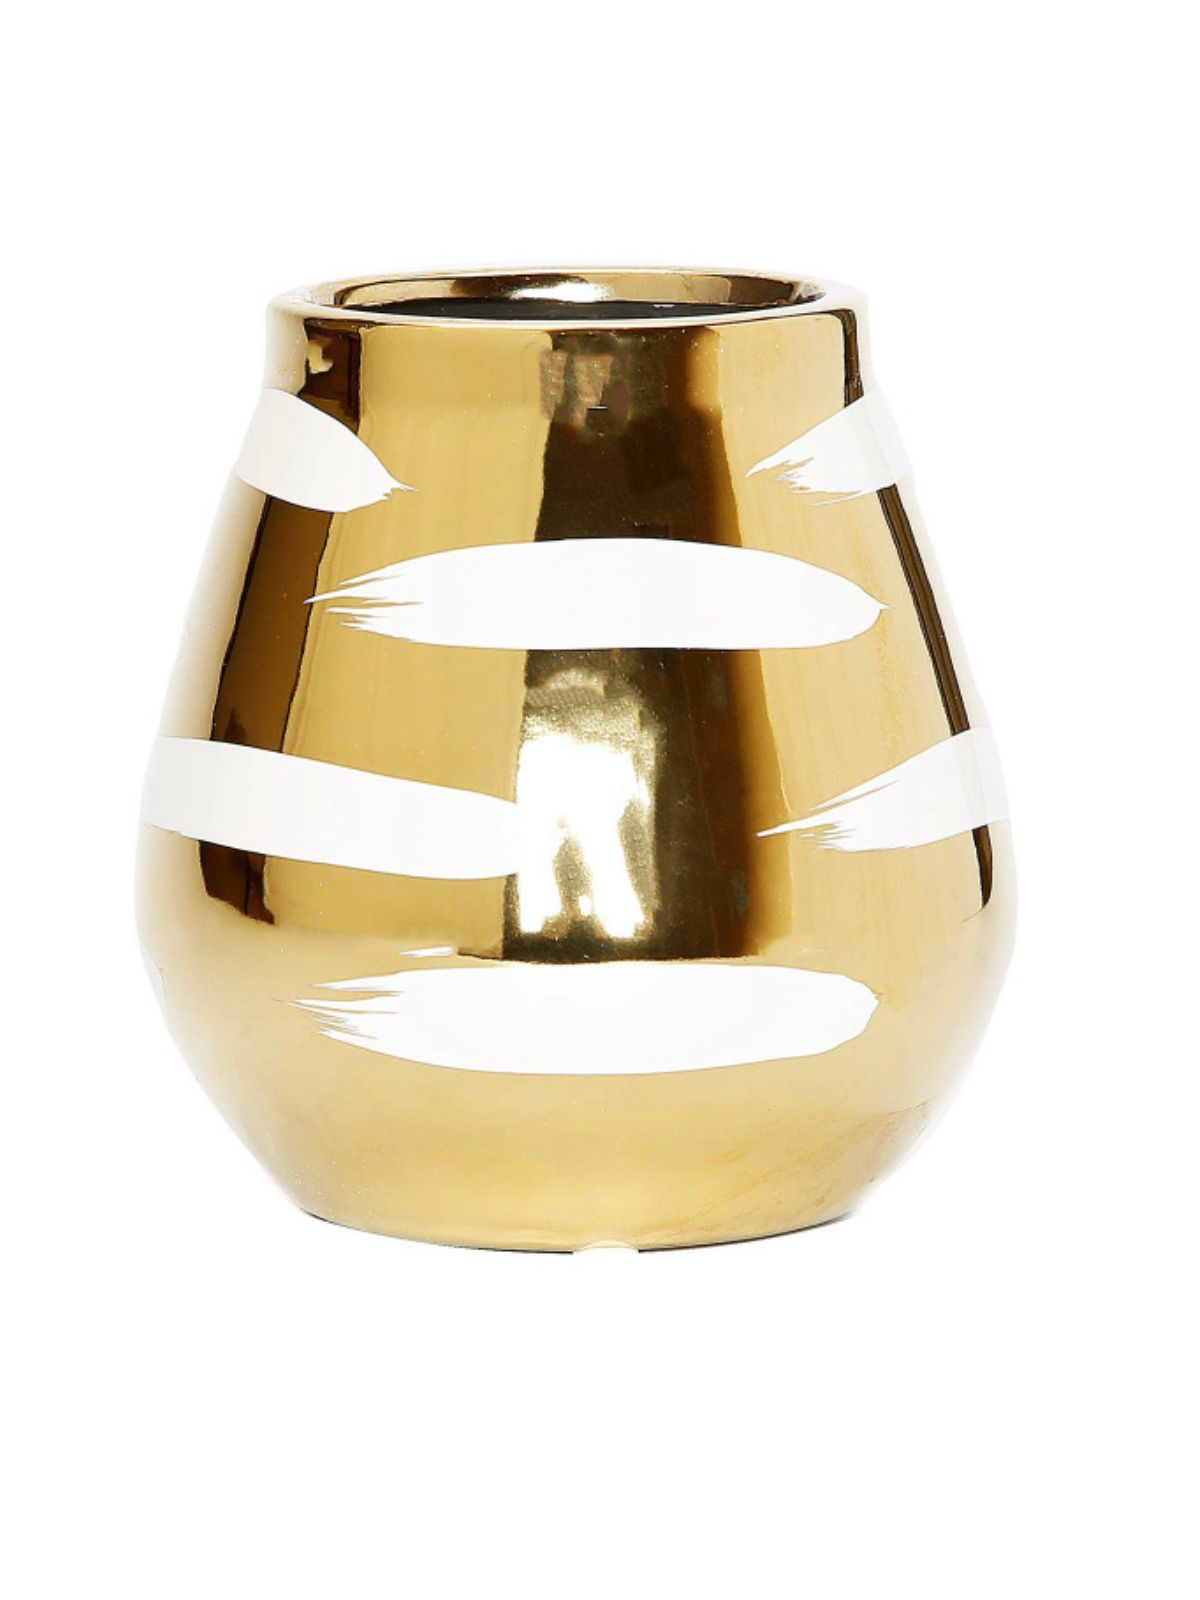 5H Gold Ceramic Bud Shape Decorative Vase with Luxurious White Brushstroke Detail - KYA Home Decor.